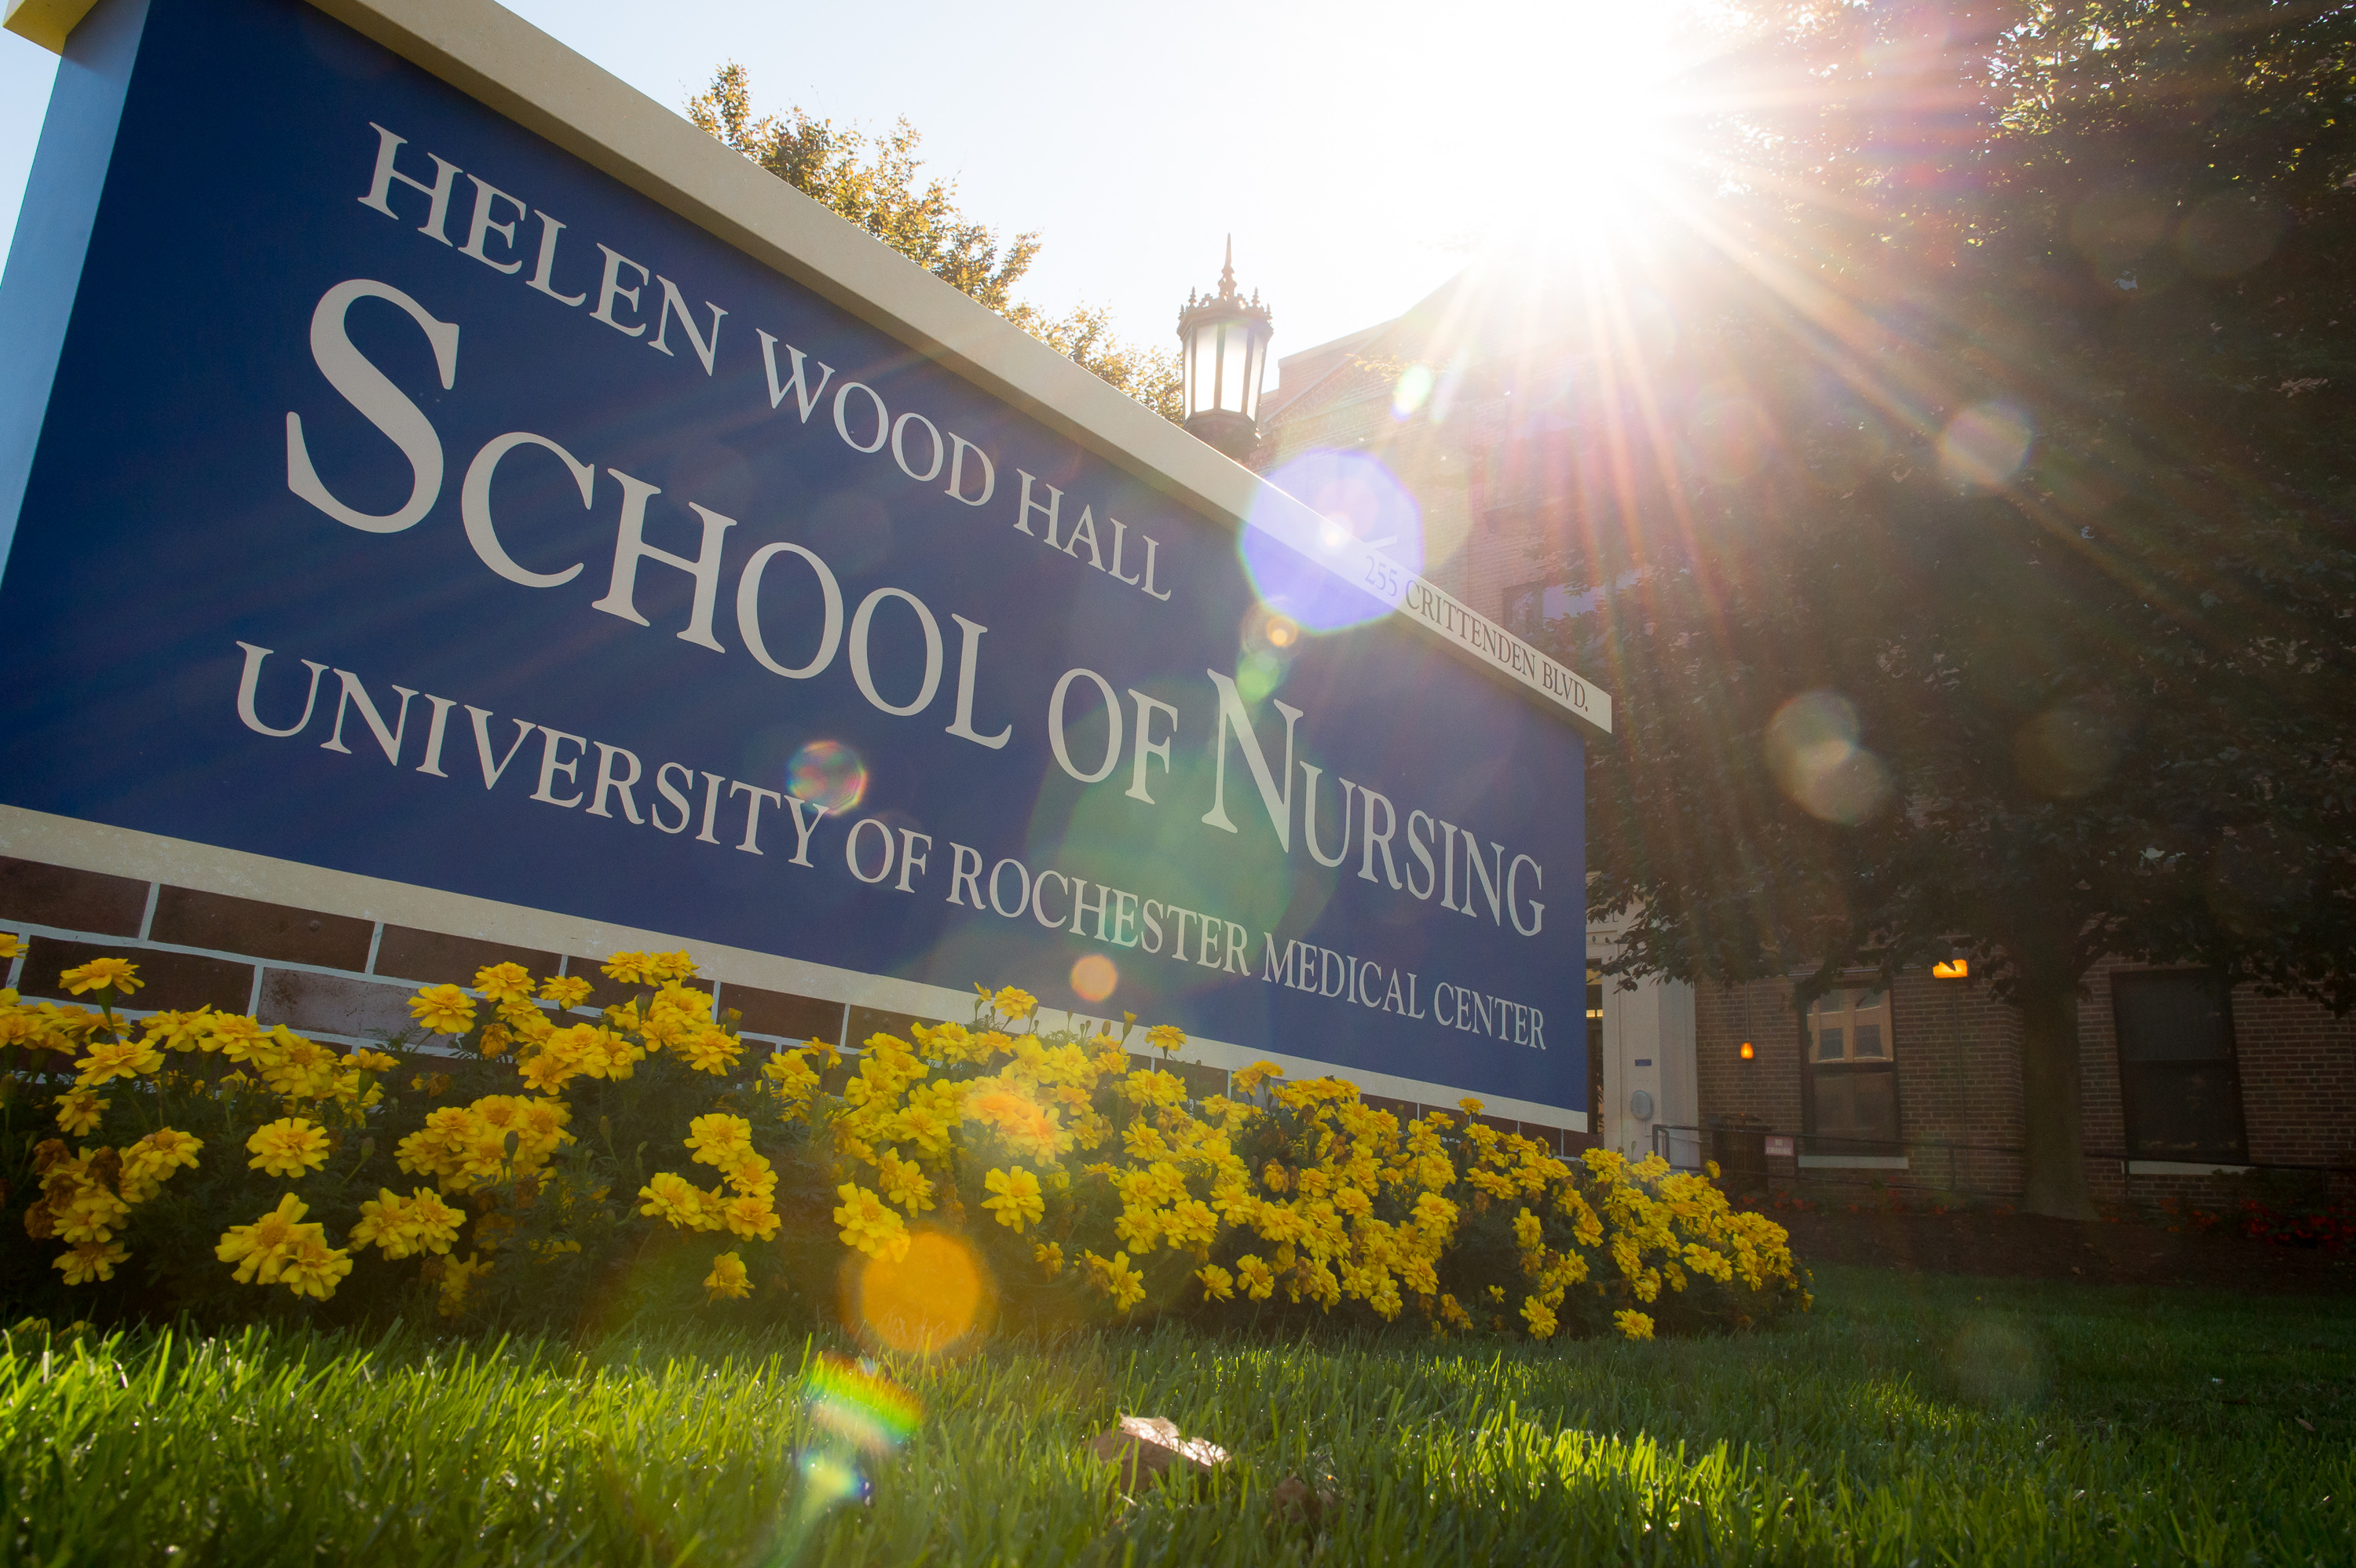 University of Rochester School of Nursing campus sign